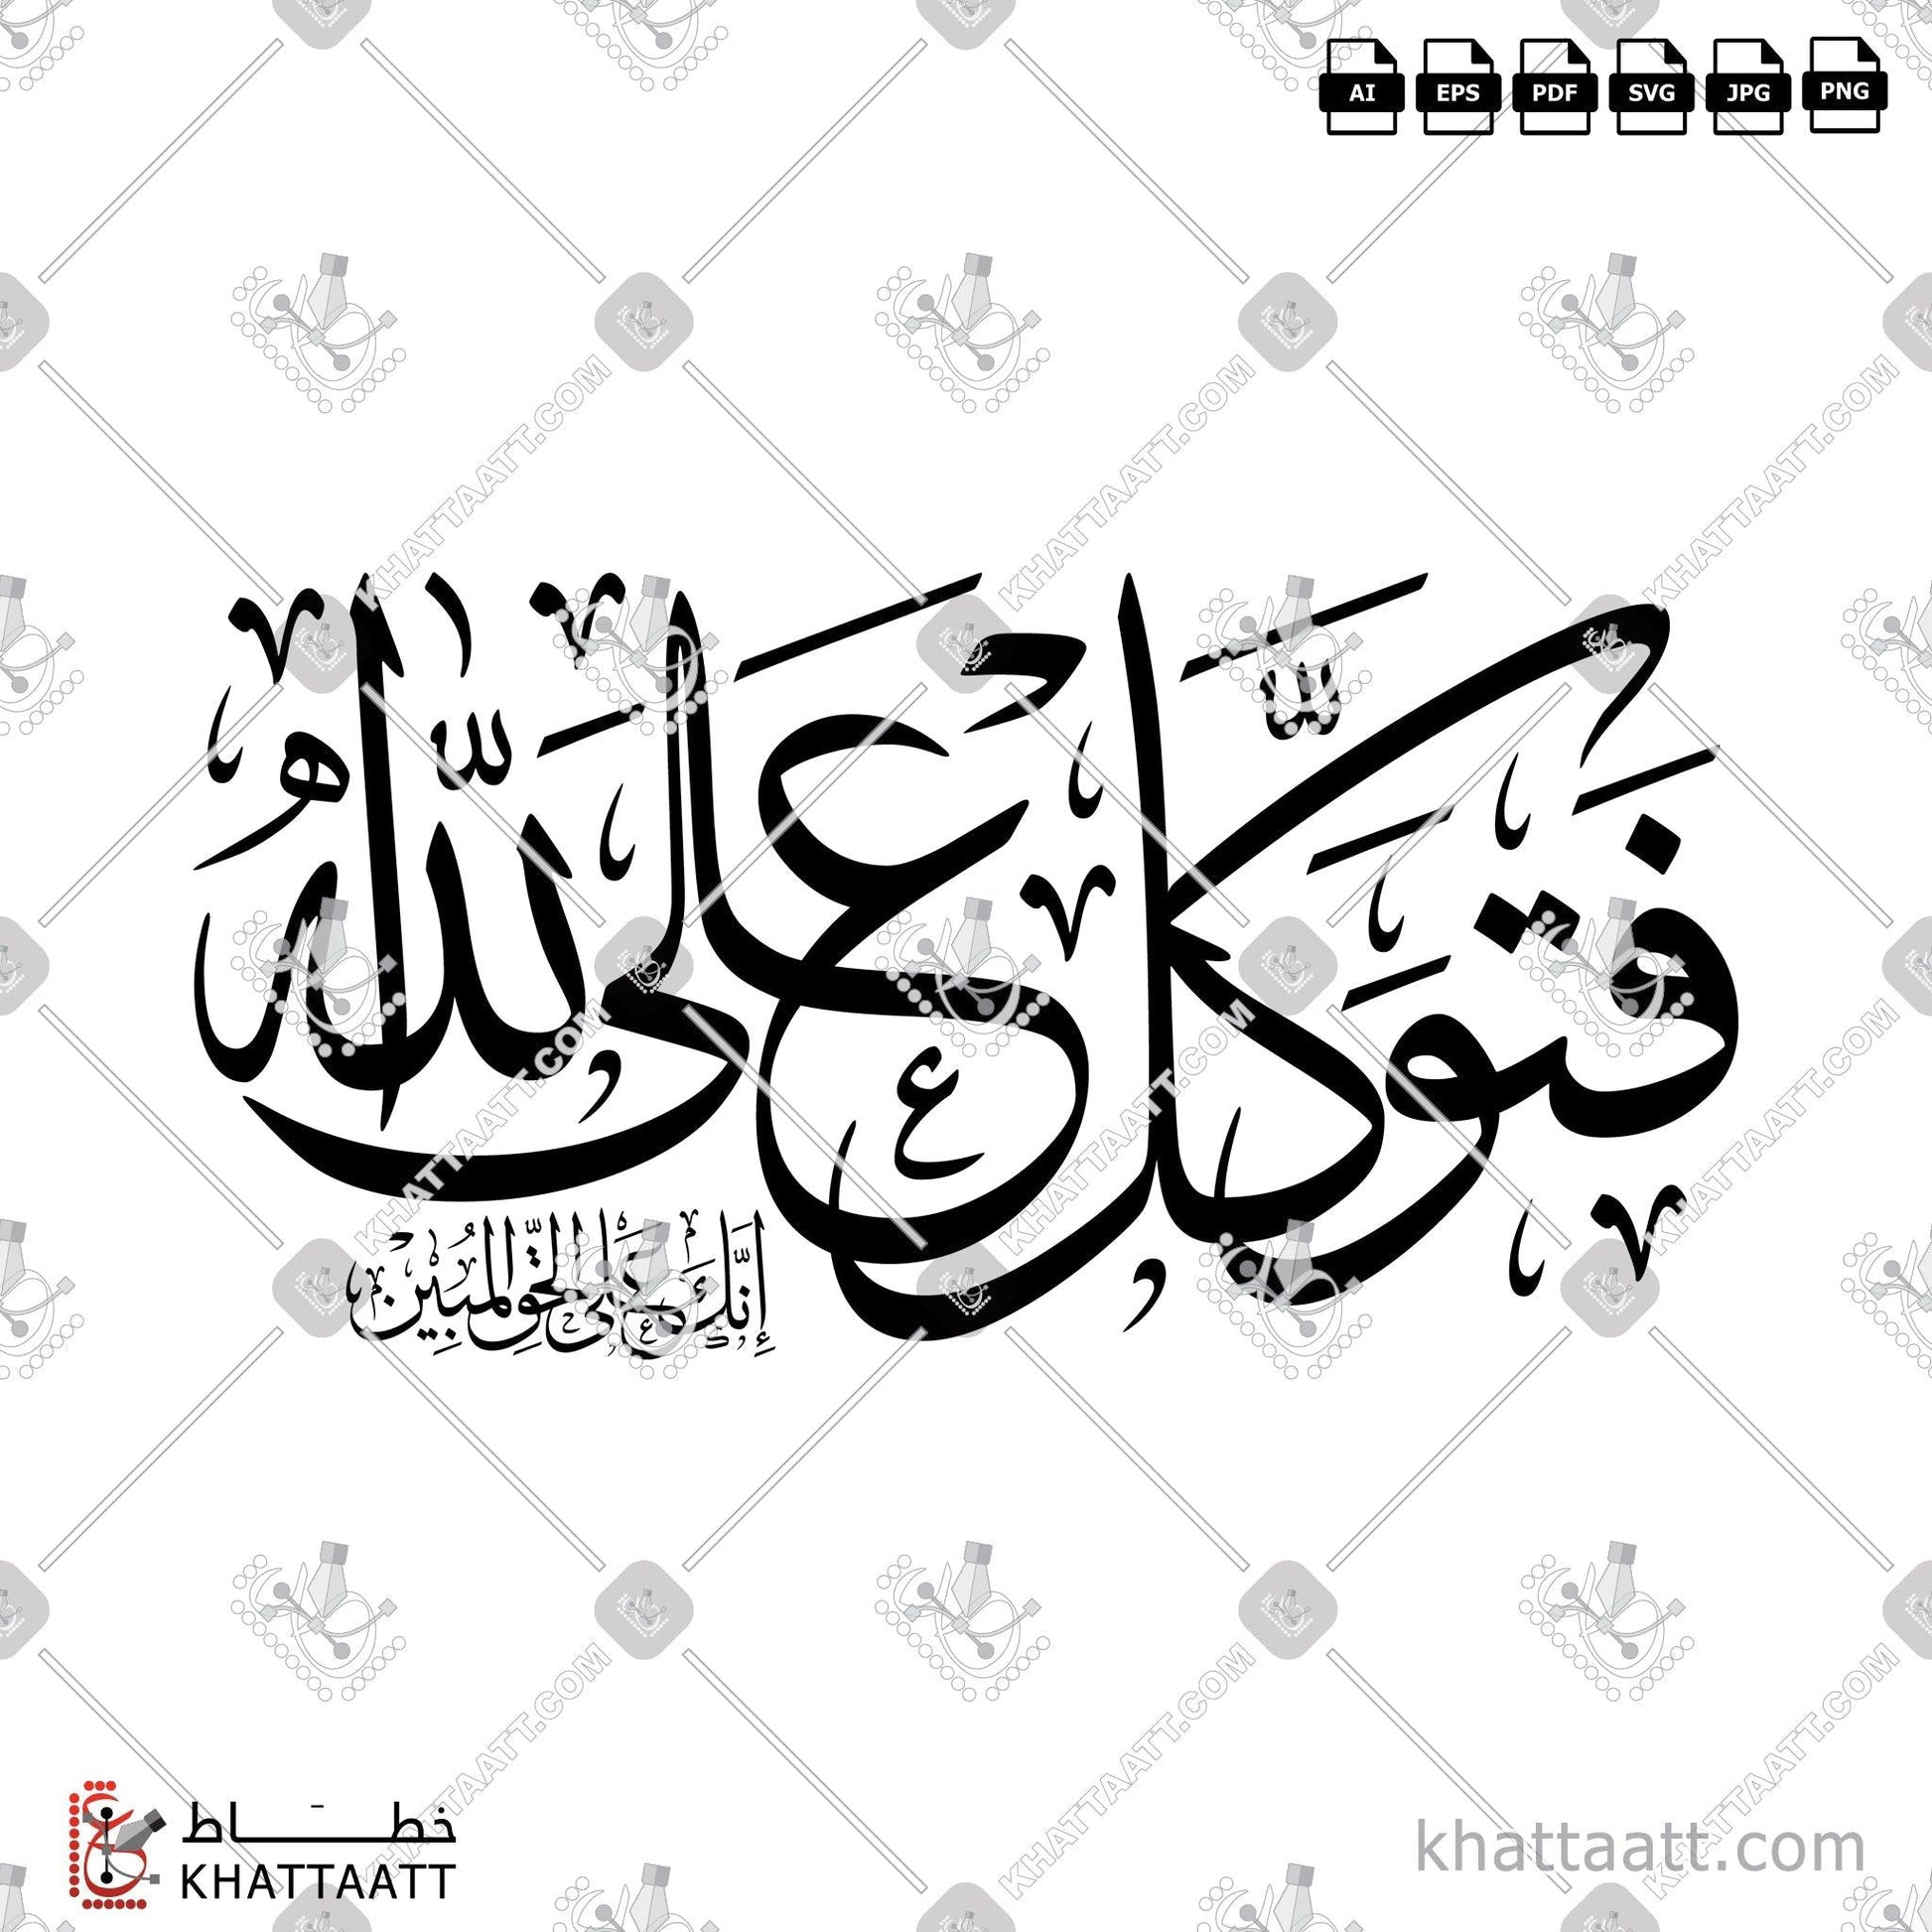 Download Arabic Calligraphy of فتوكل على الله انك على الحق المبين in Thuluth - خط الثلث in vector and .png